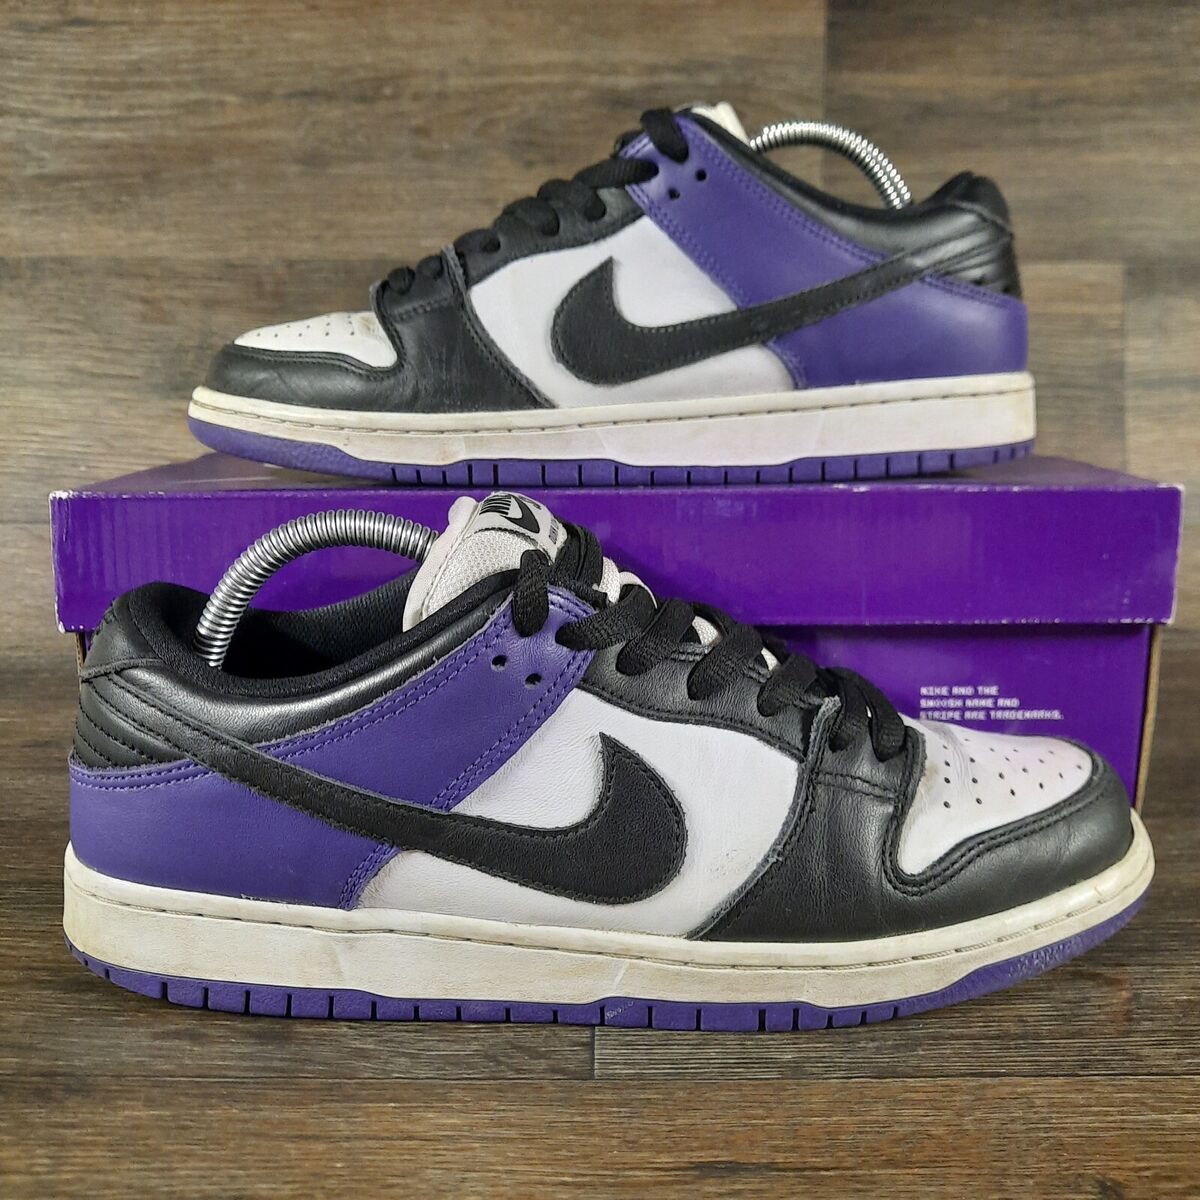 Nike SB Dunk Low Pro Court Purple Black White Men’s Shoes BQ6817-500 Size  9.5